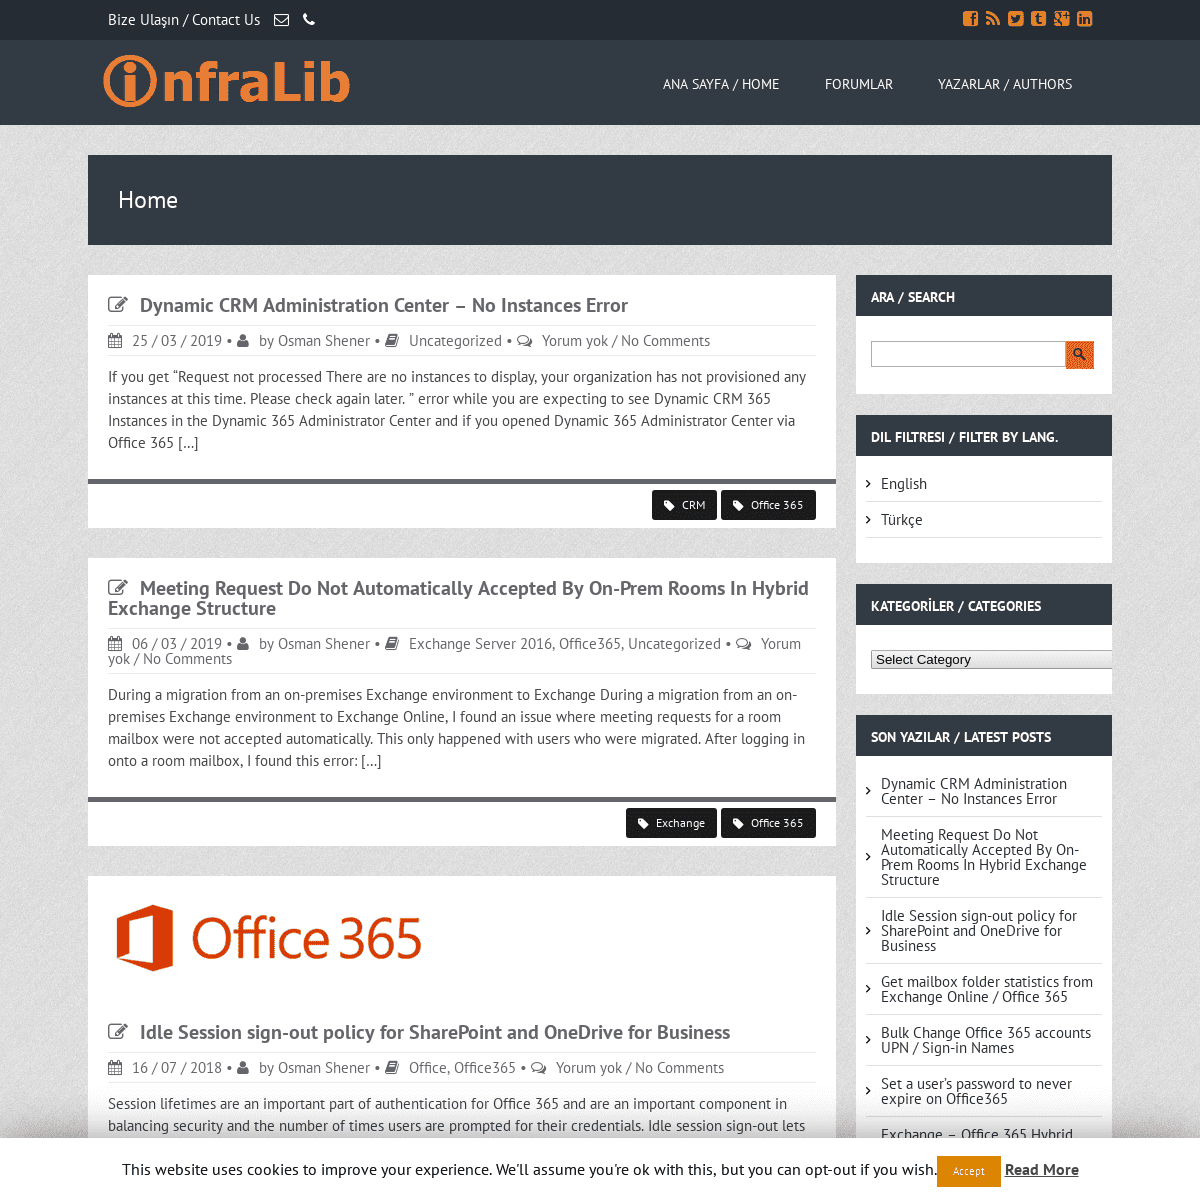 A complete backup of infralib.com